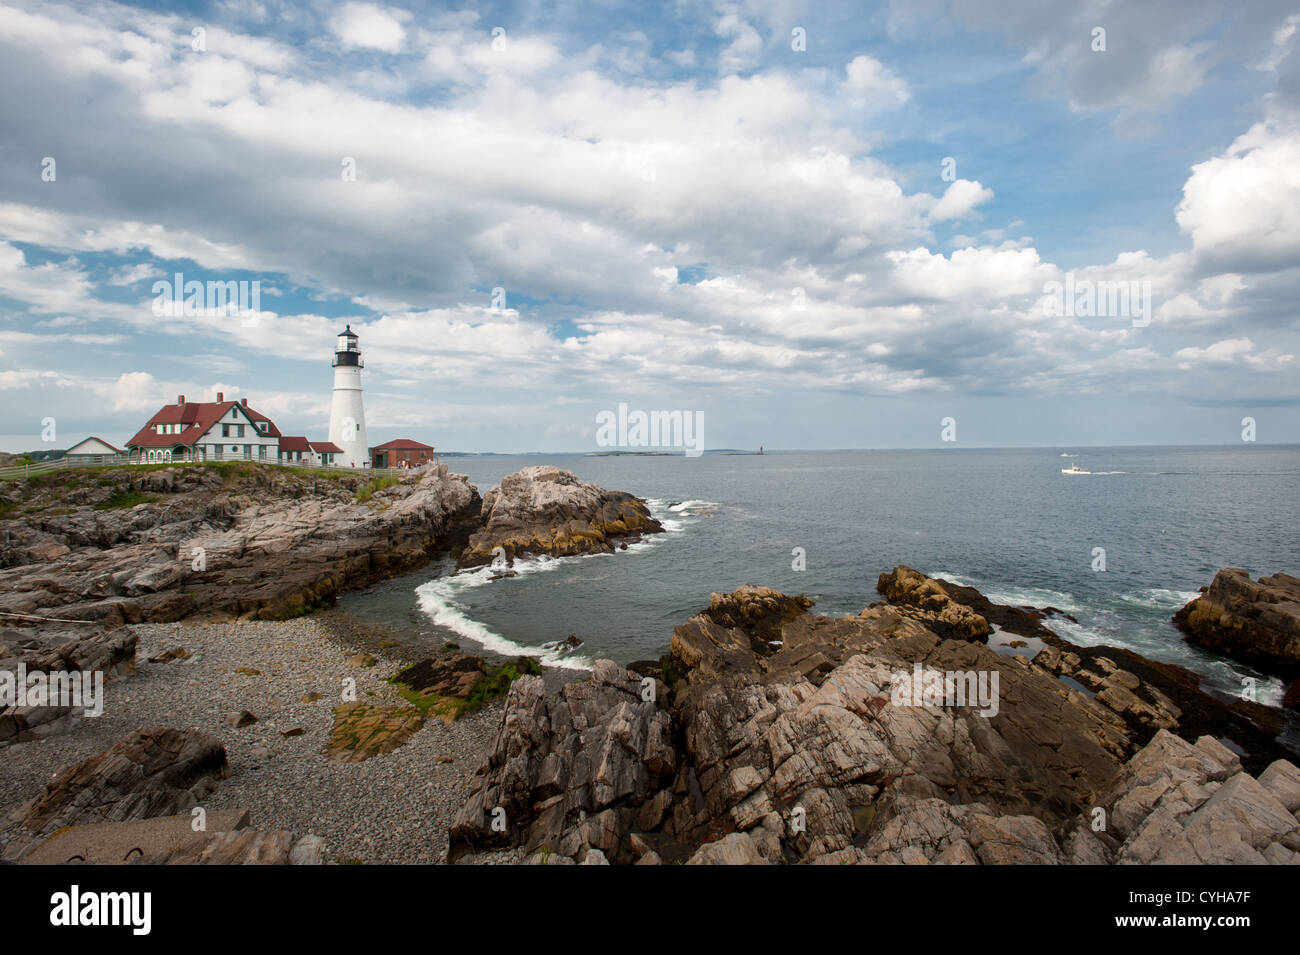 Lighthouse overlooking rocky shore of Cape Elizabeth Maine Stock Photo